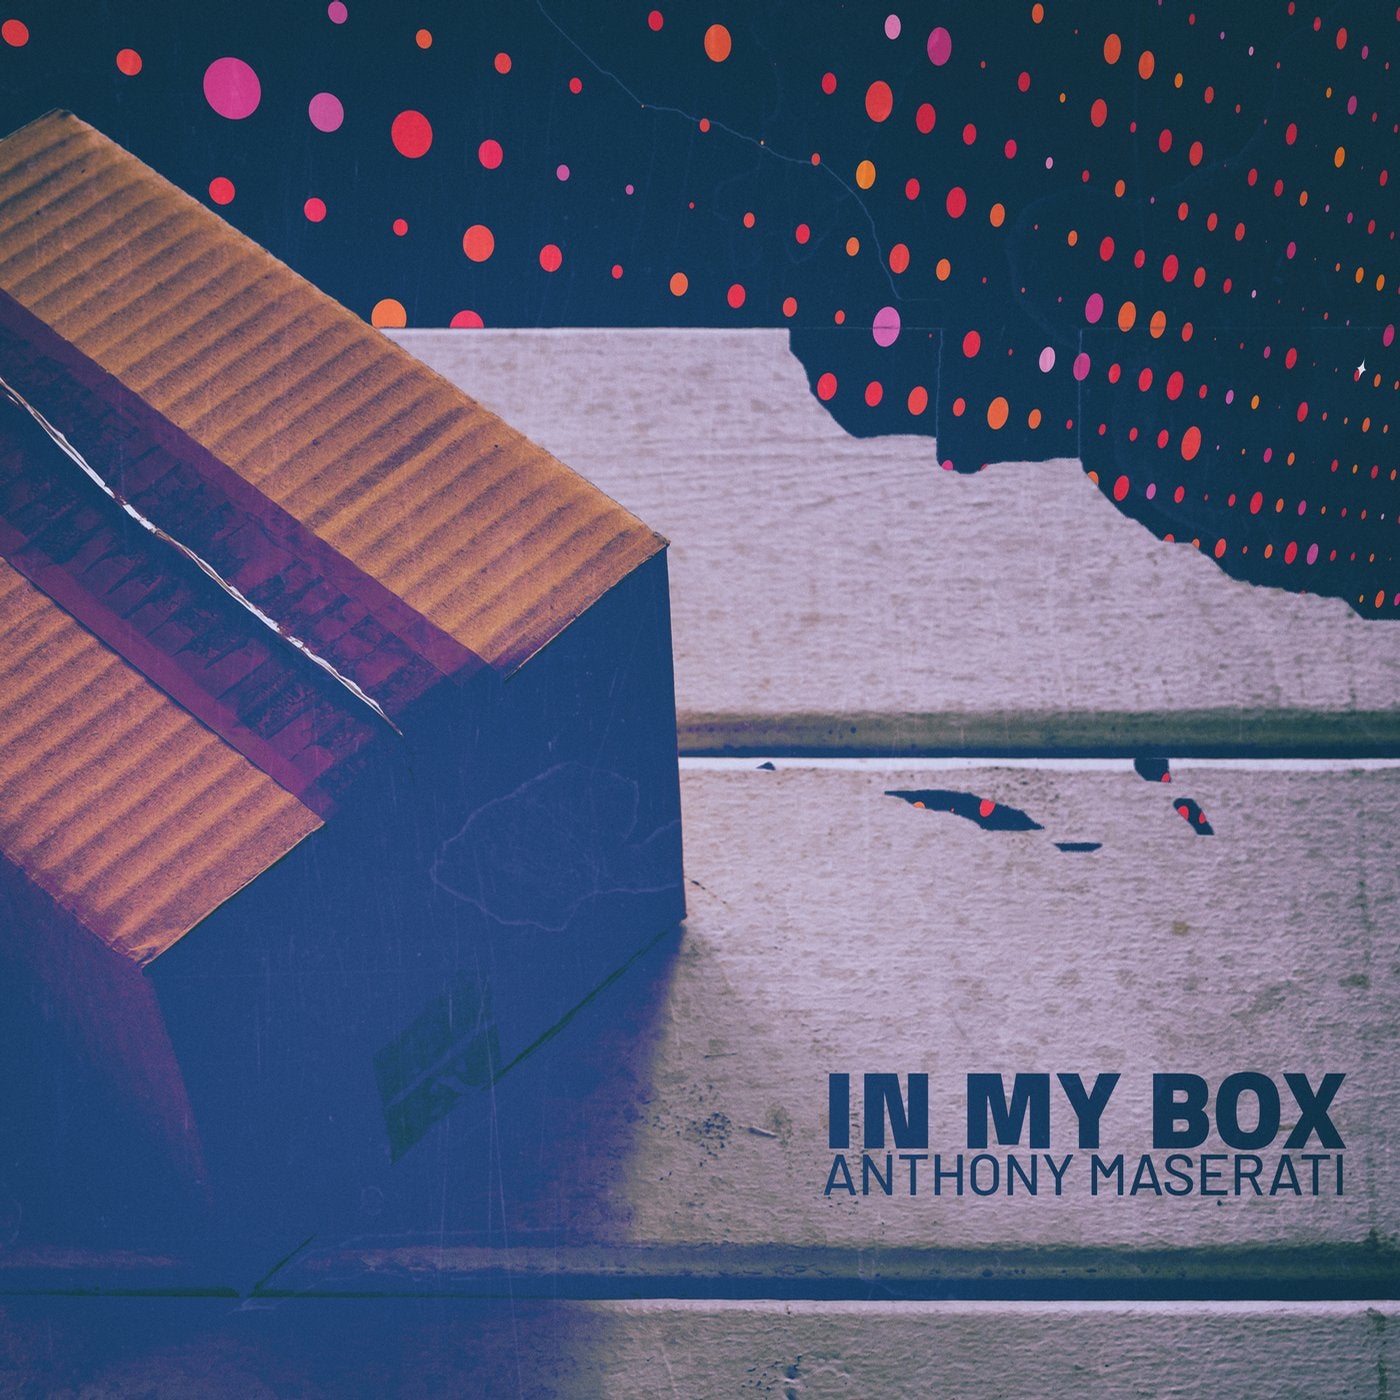 In My Box